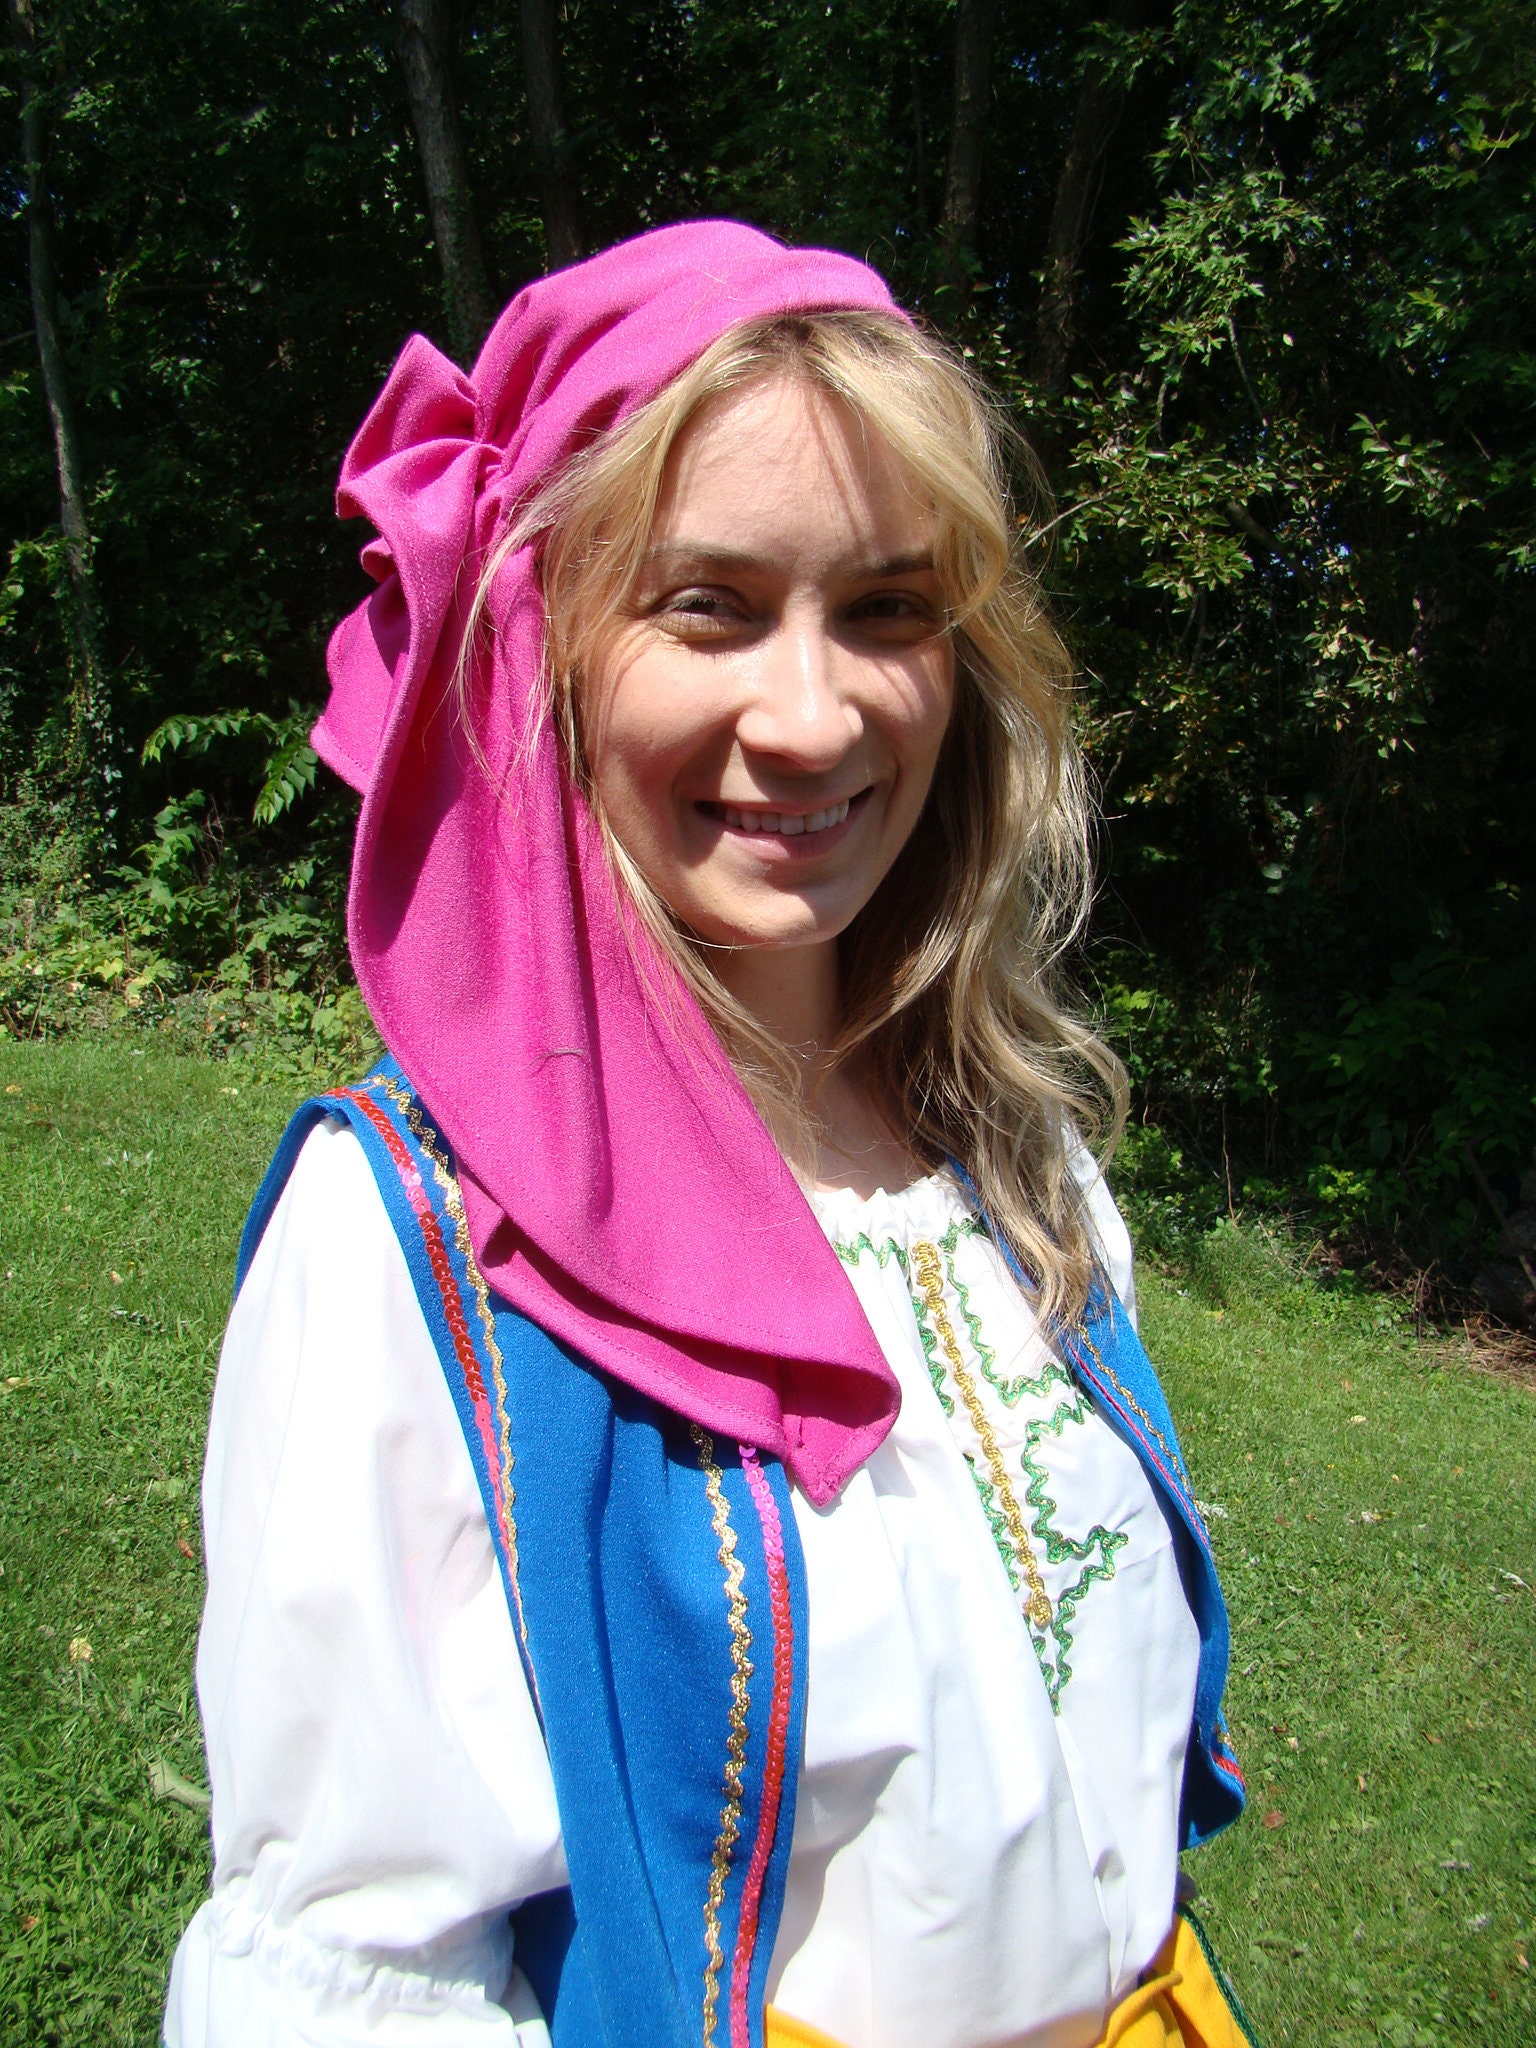 Ladies Gypsy Girl Fortune Teller Costume Womens Mystic Fancy Dress Plus  Size